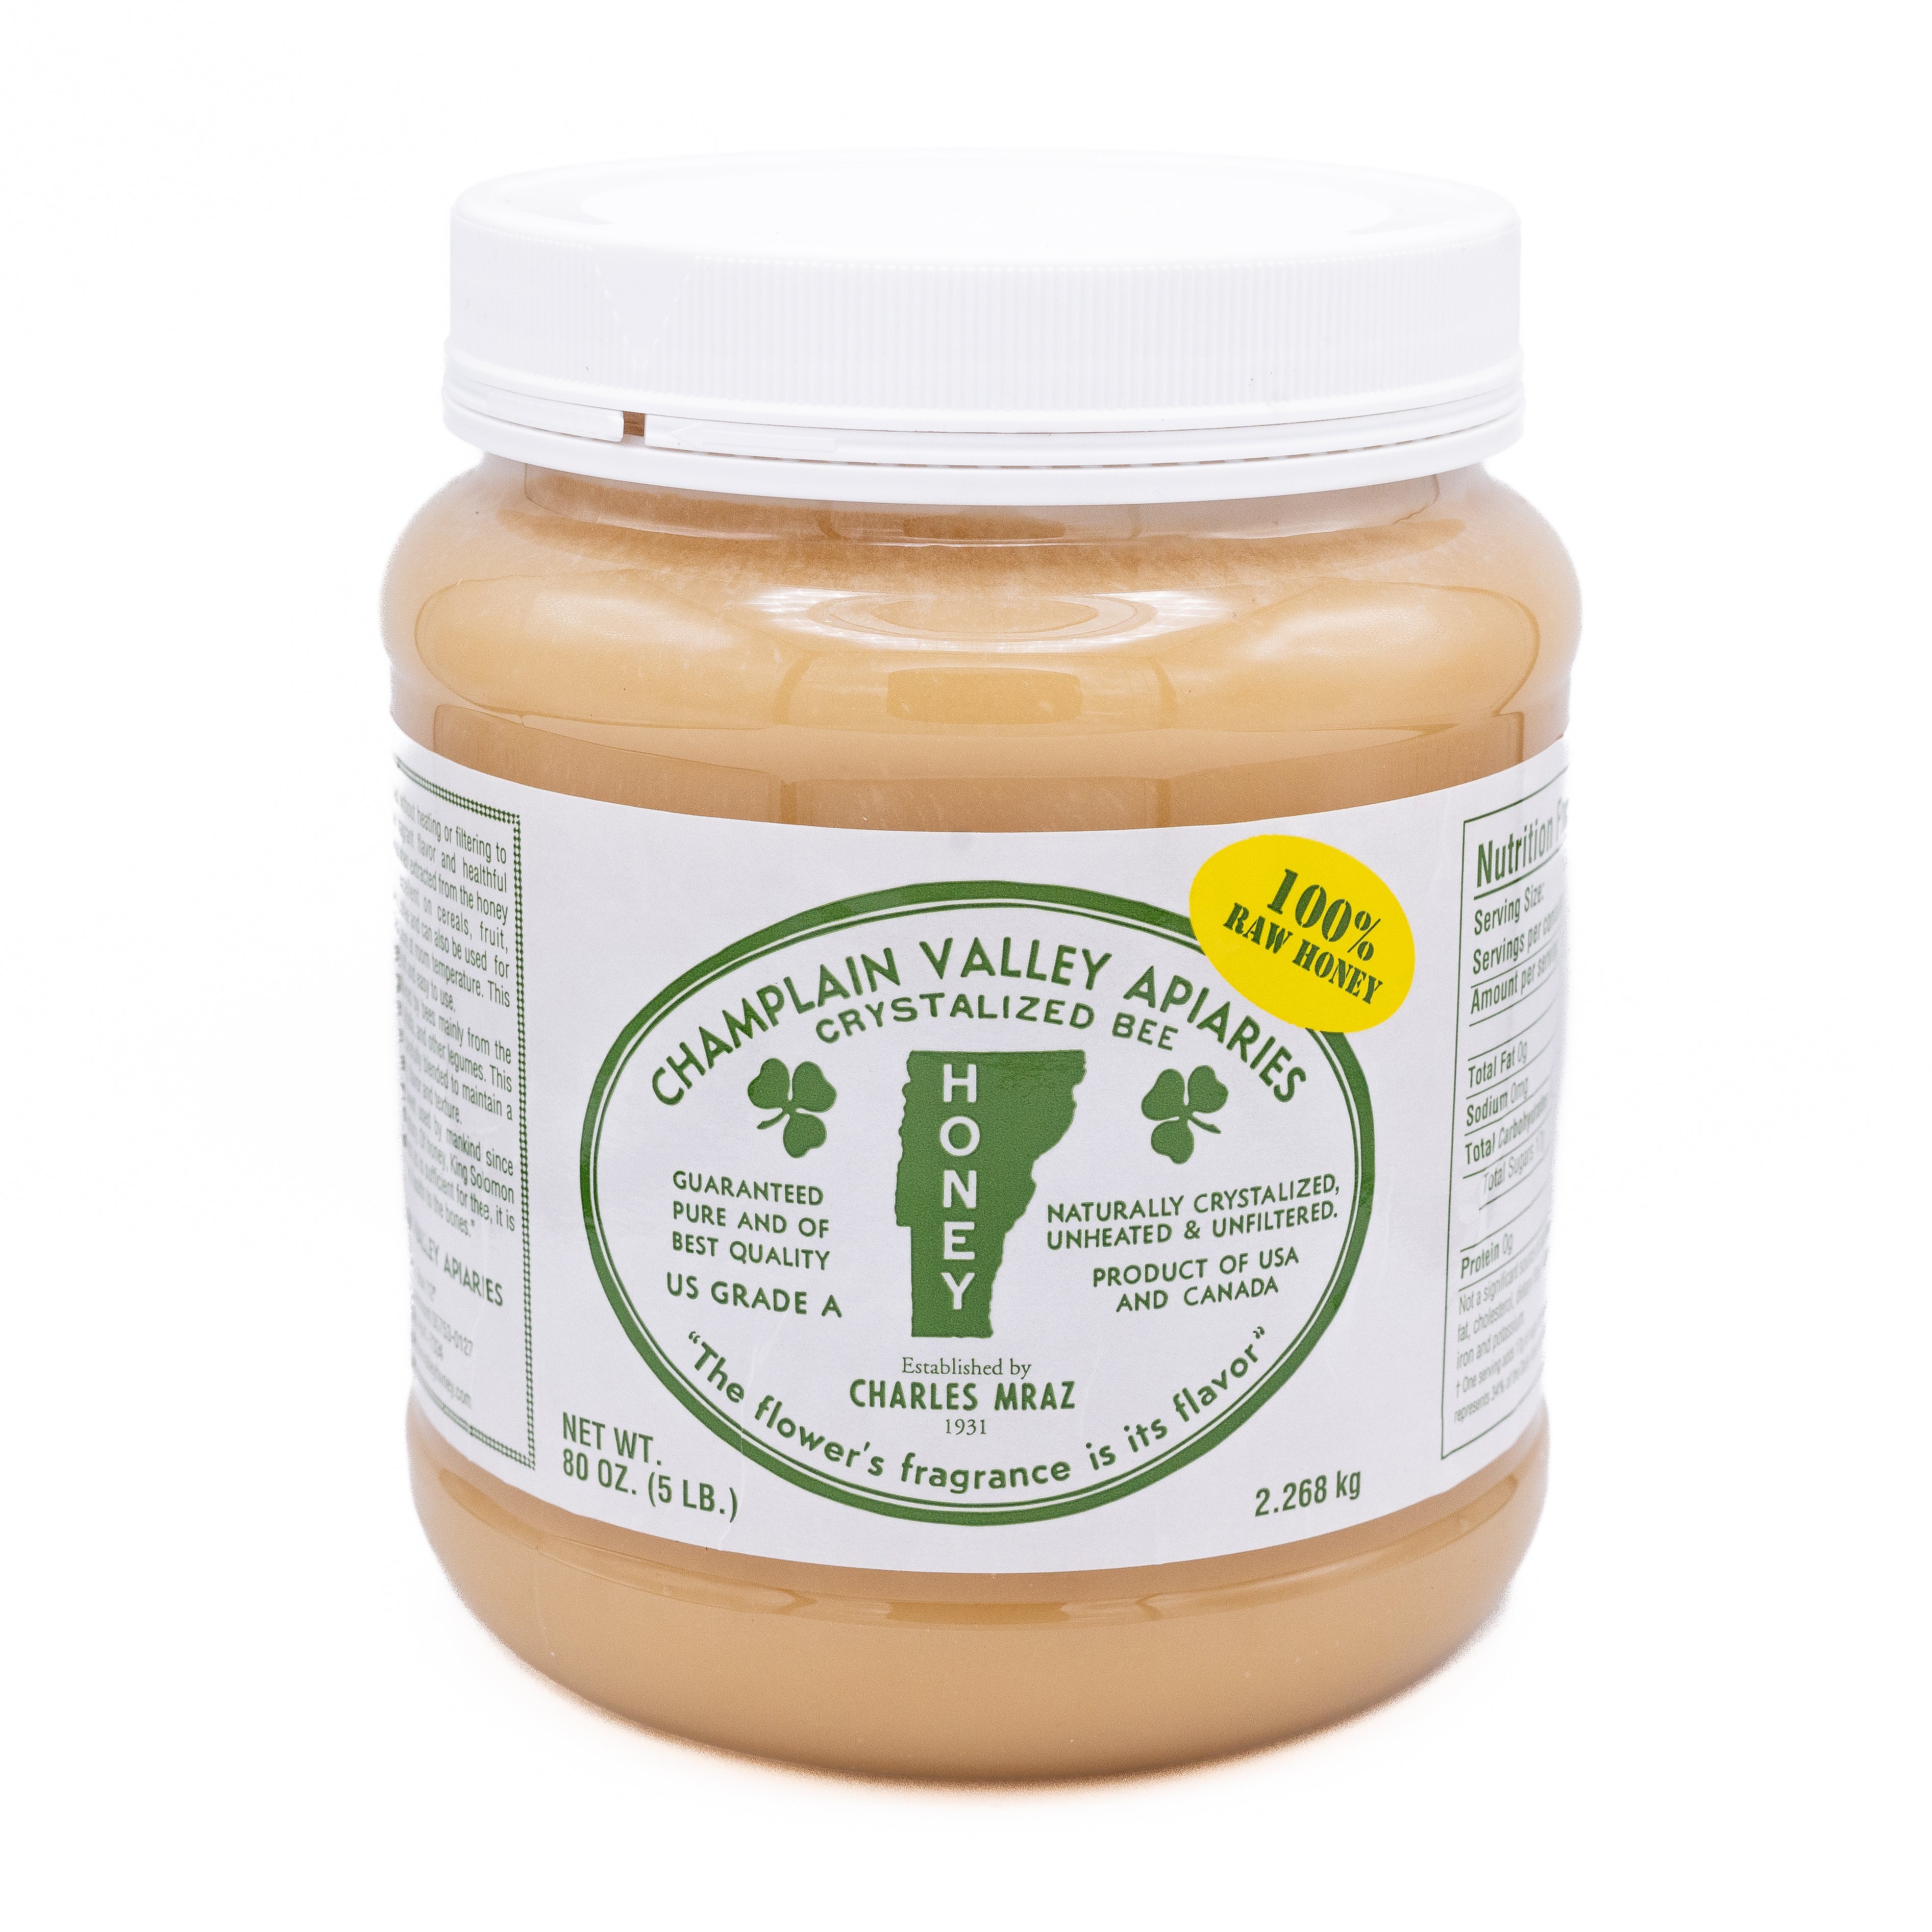 5 pound jar of vermont raw honey champlain valley apiaries